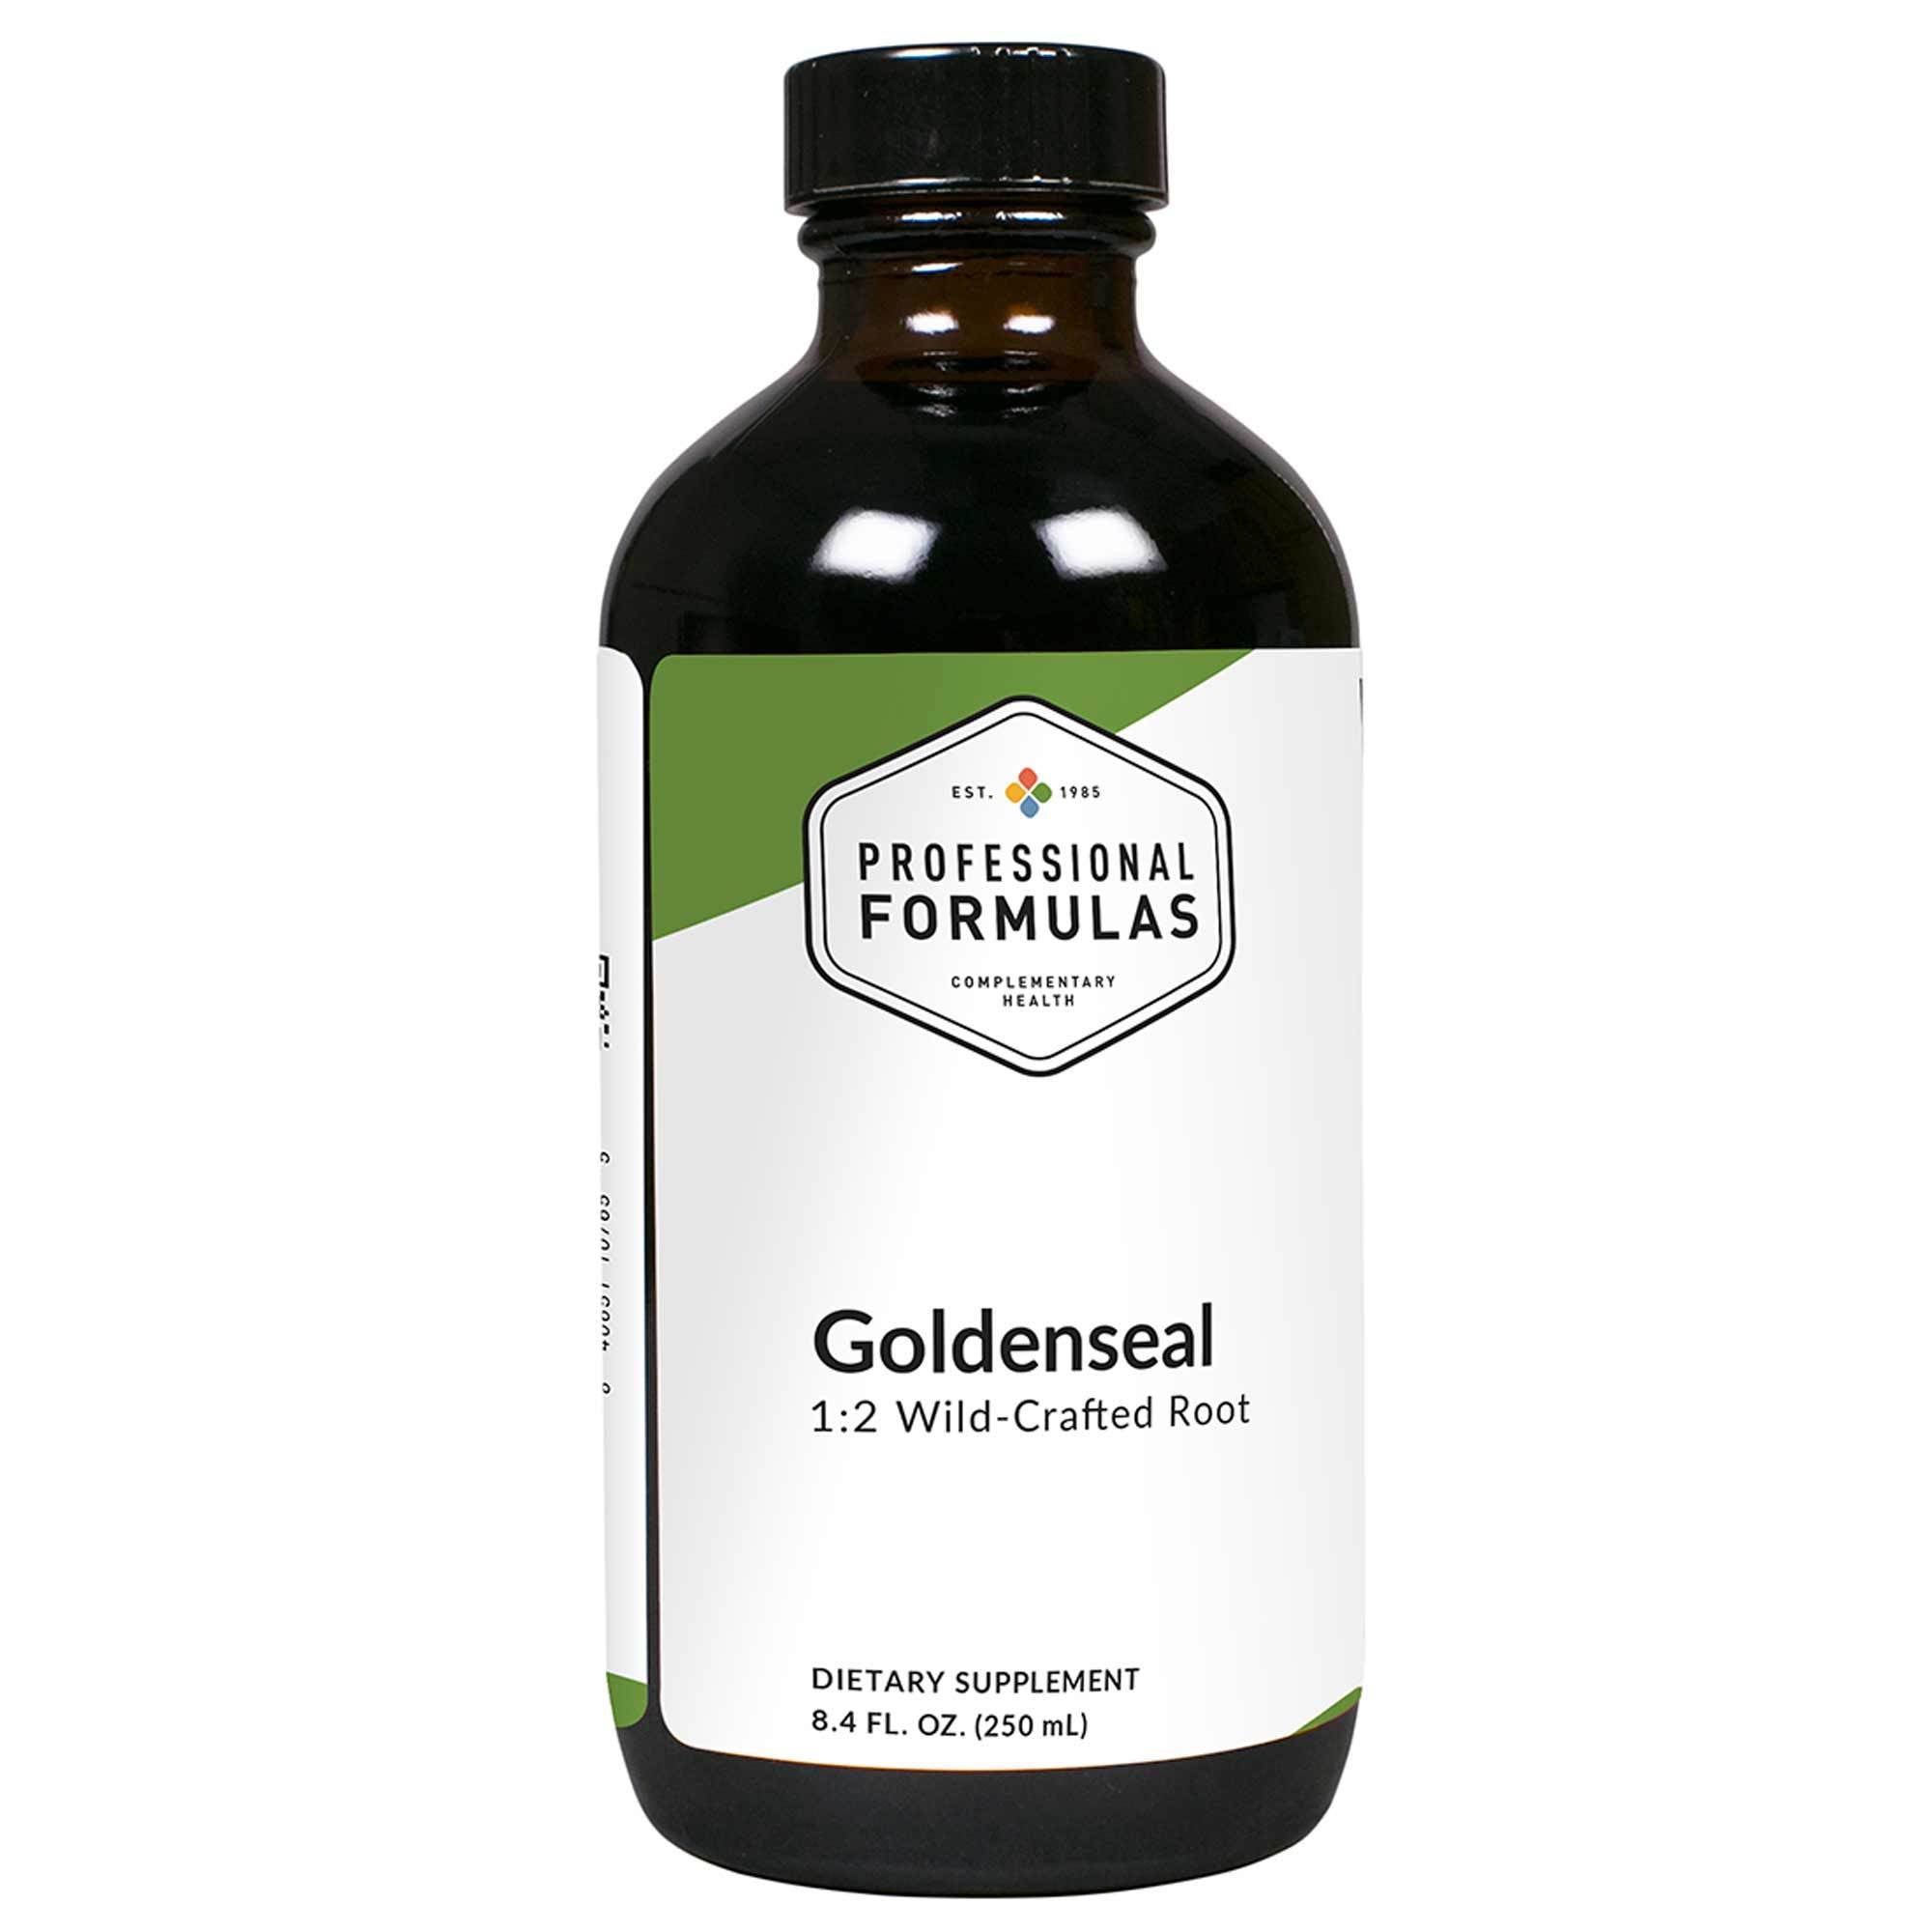 Professional Formulas - Goldenseal (Hydrastis canadensis) - 8.4 FL. OZ. (250 mL)